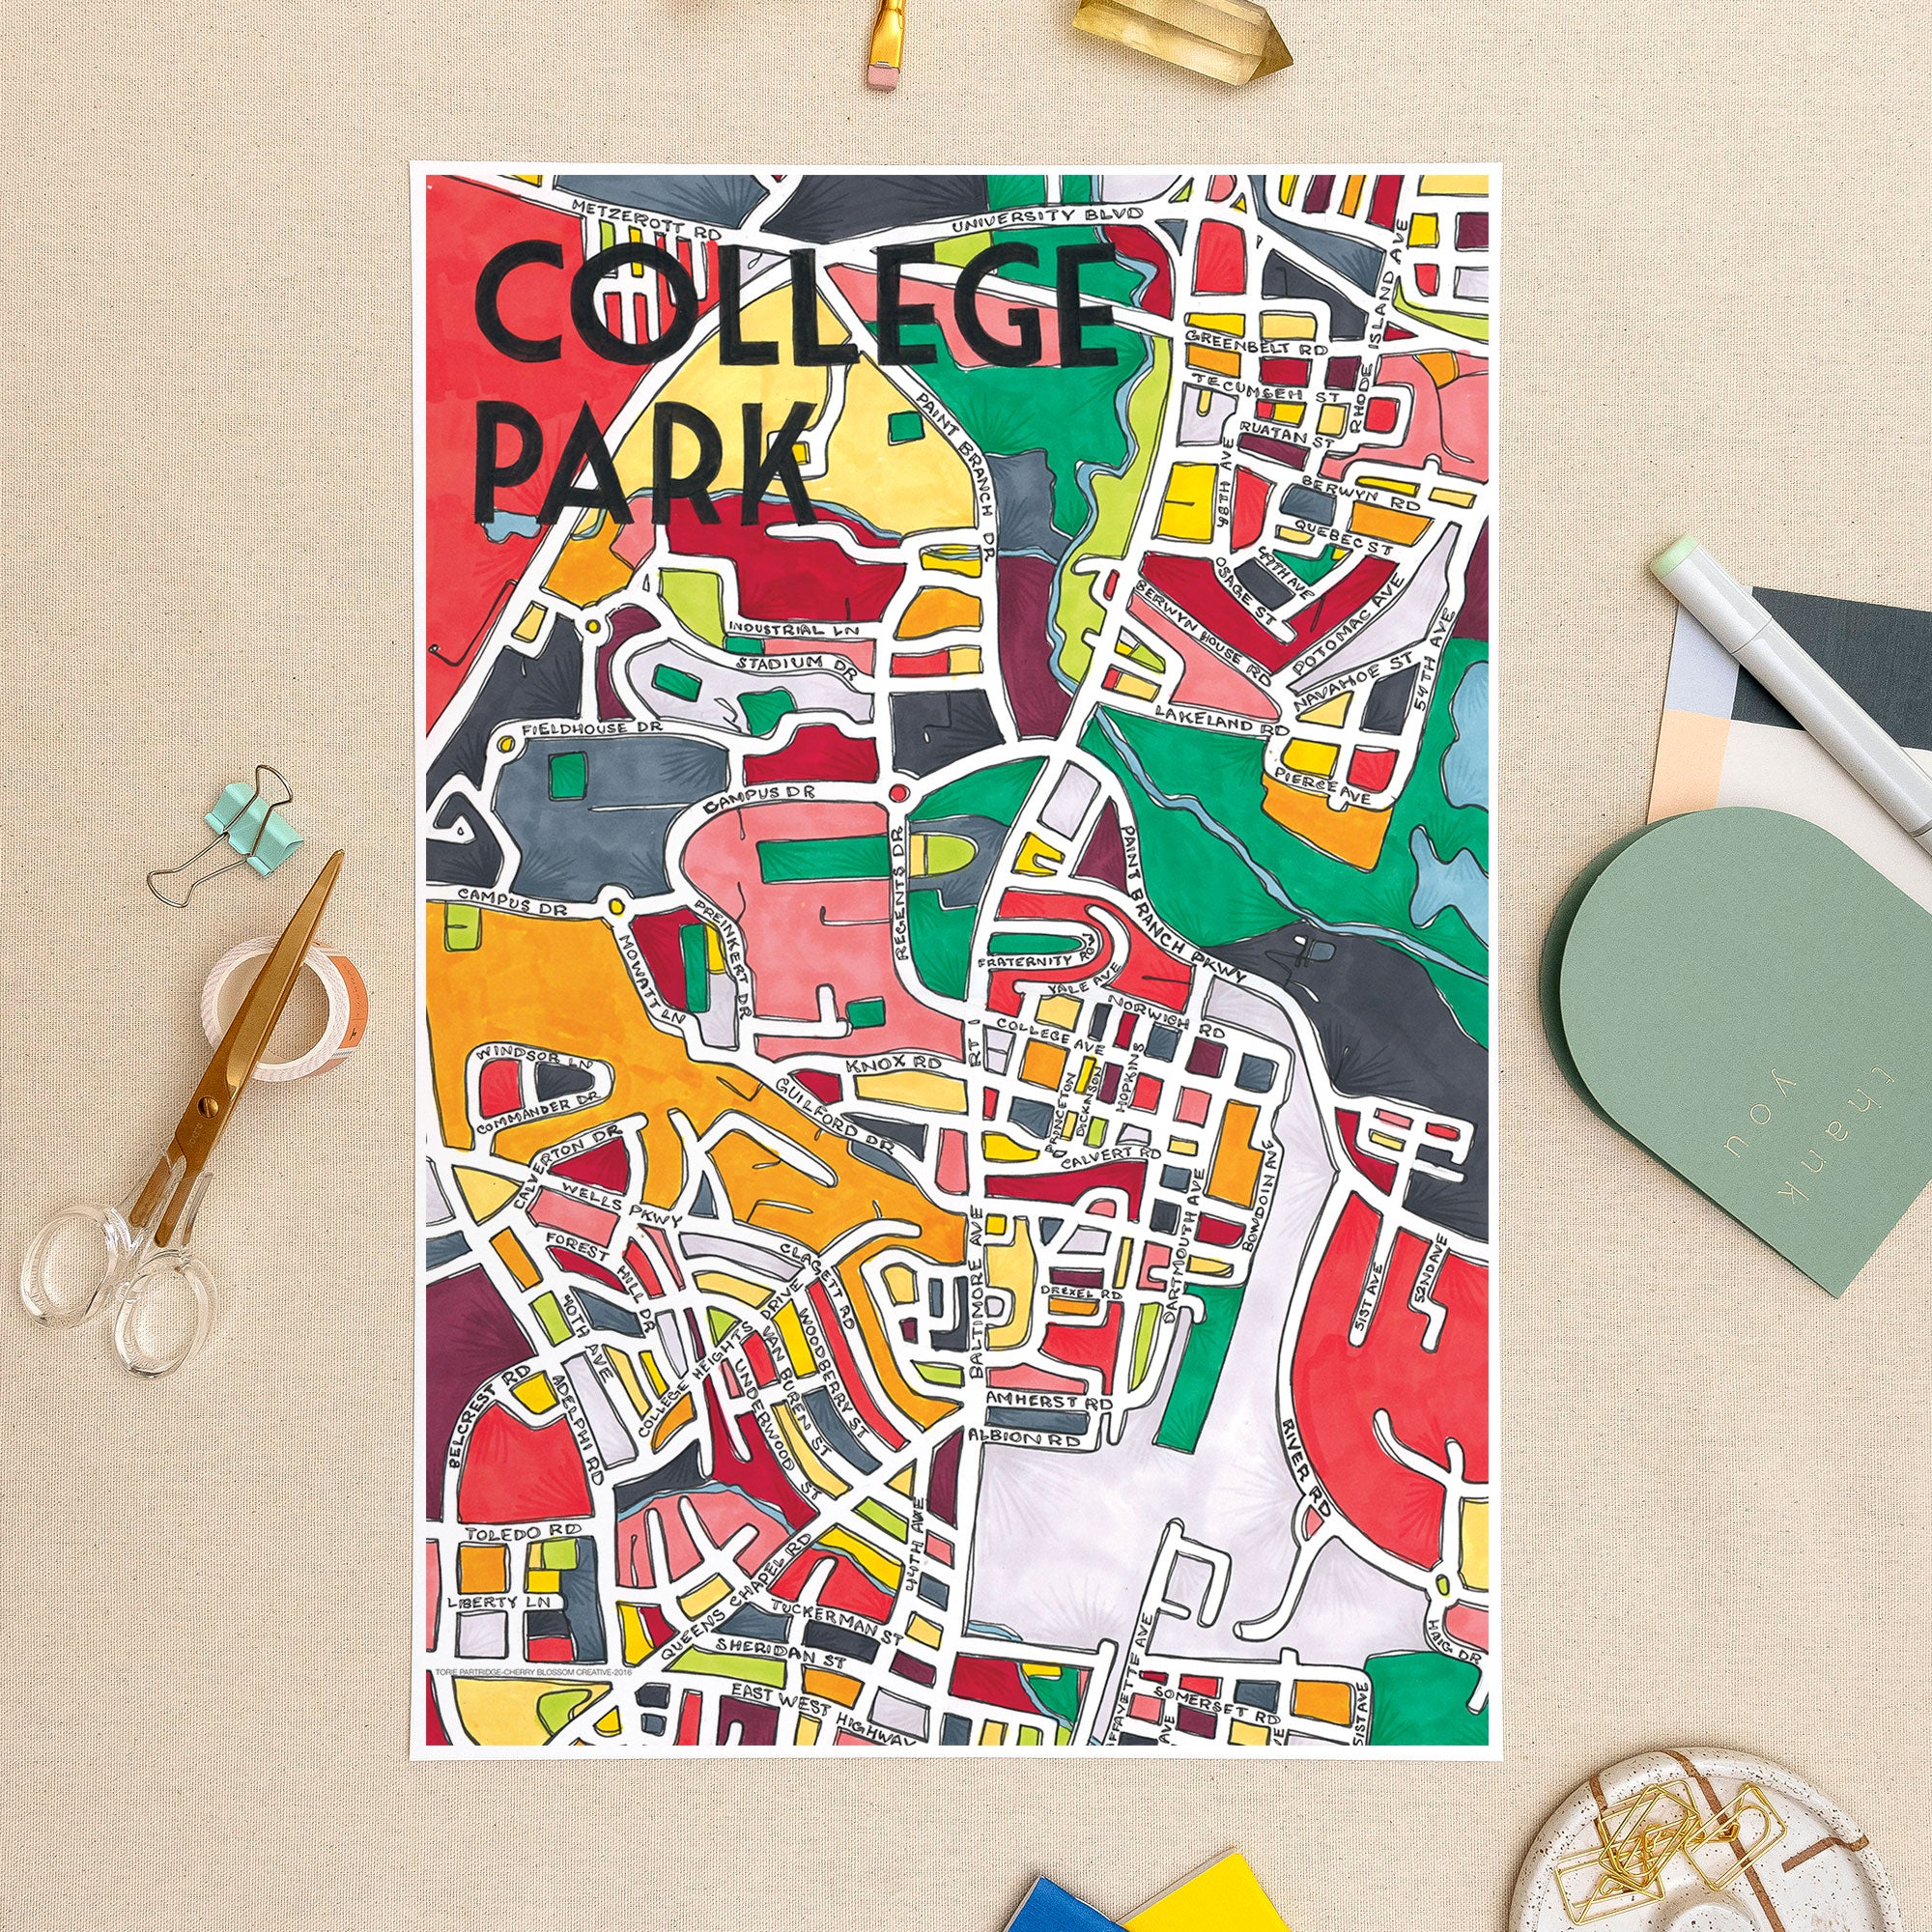 College Park Print